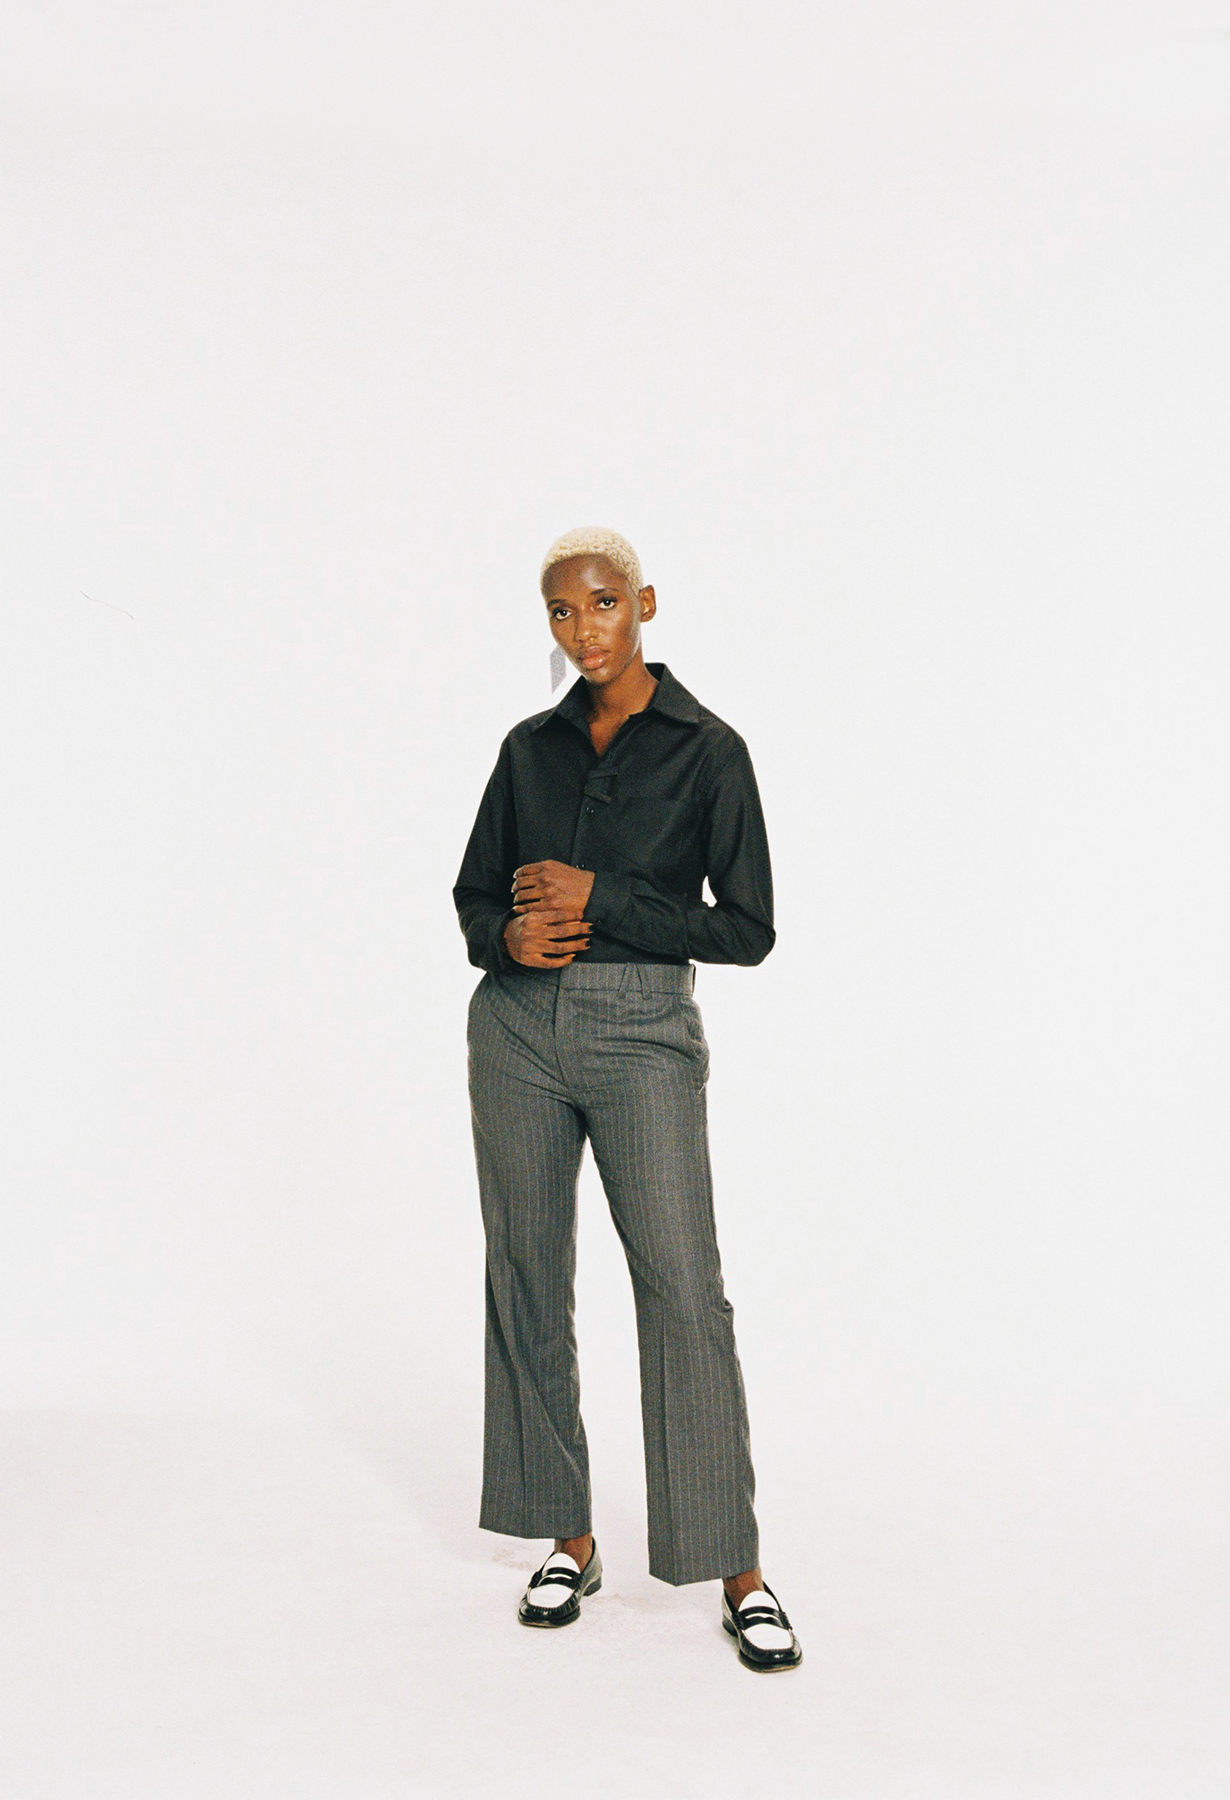 35mm film colour studio image of a model wearing Armand Basi